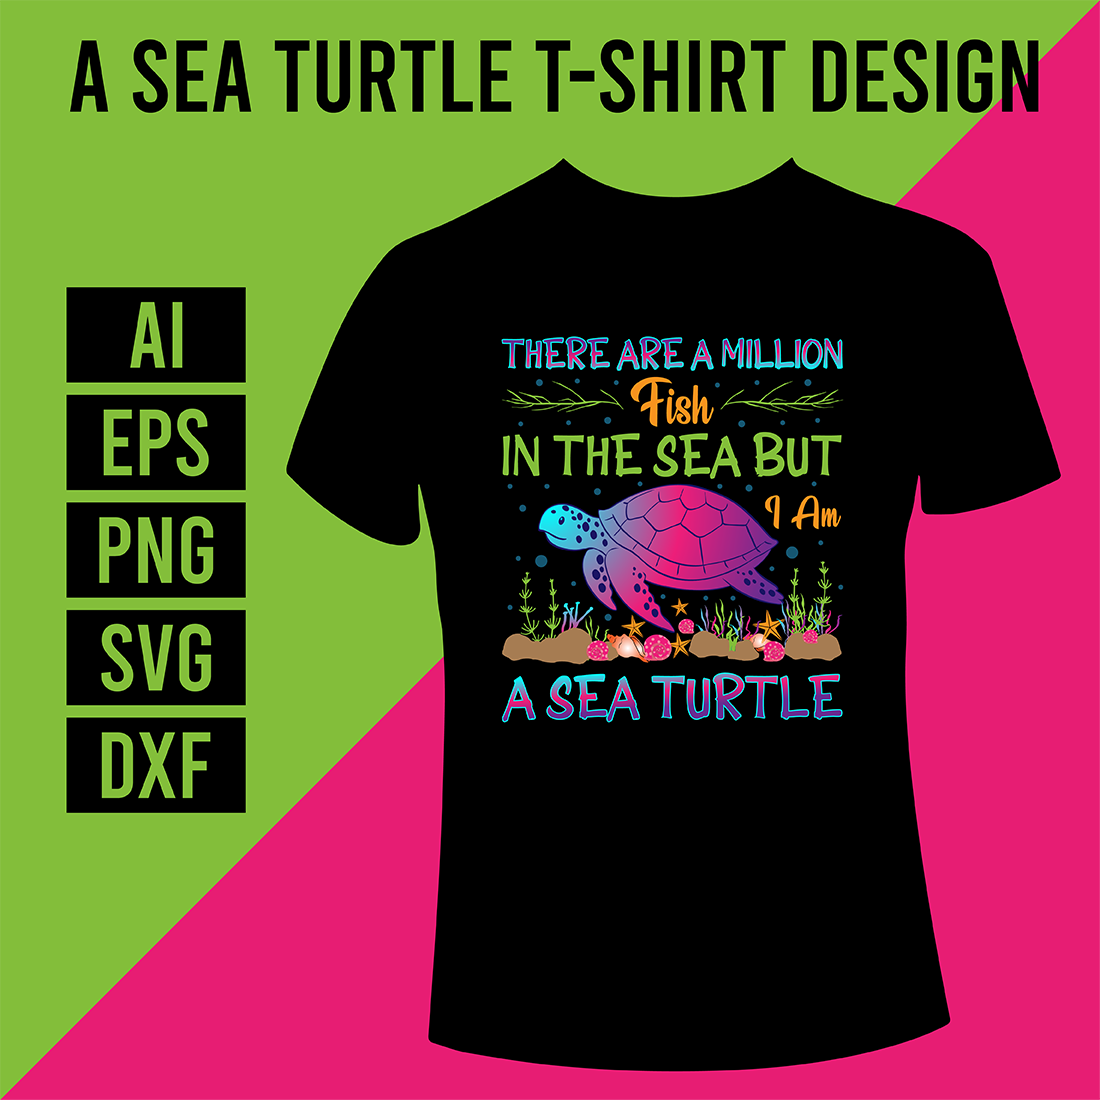 A Sea Turtle T-Shirt Design cover image.